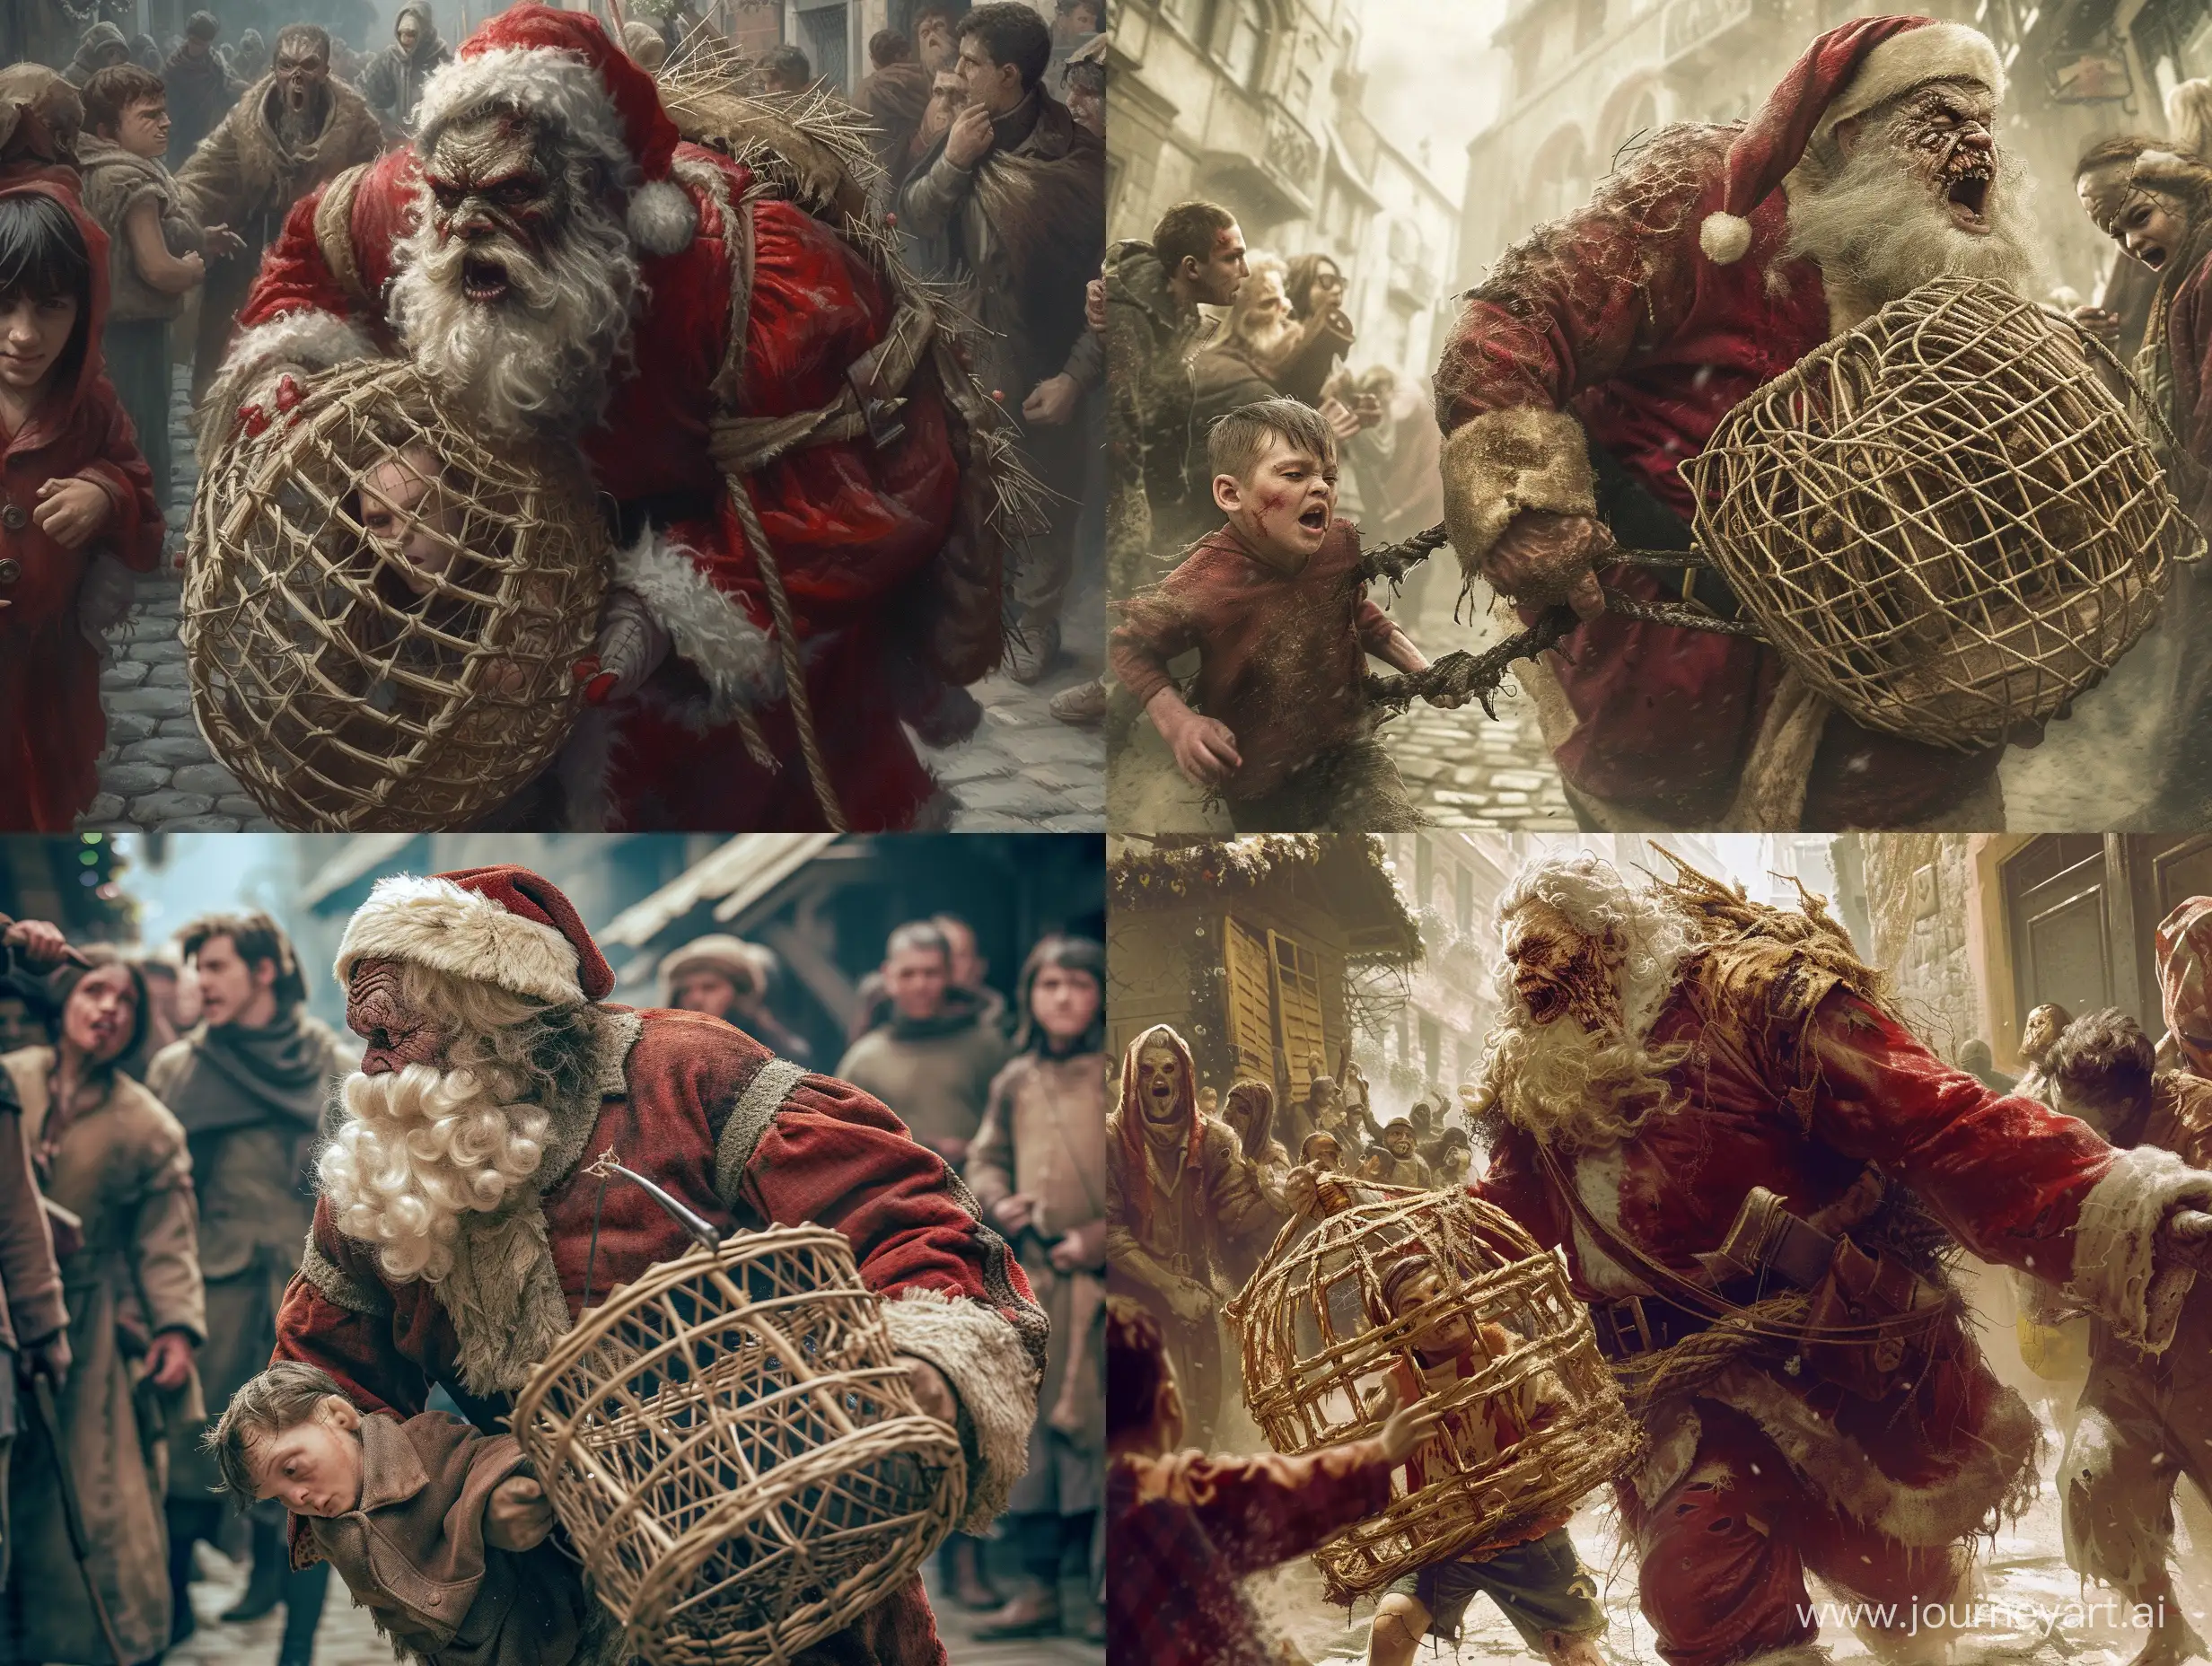 Dark-Medieval-Scene-Cruel-Santa-Claus-Drags-Frightened-Boy-in-Woven-Cage